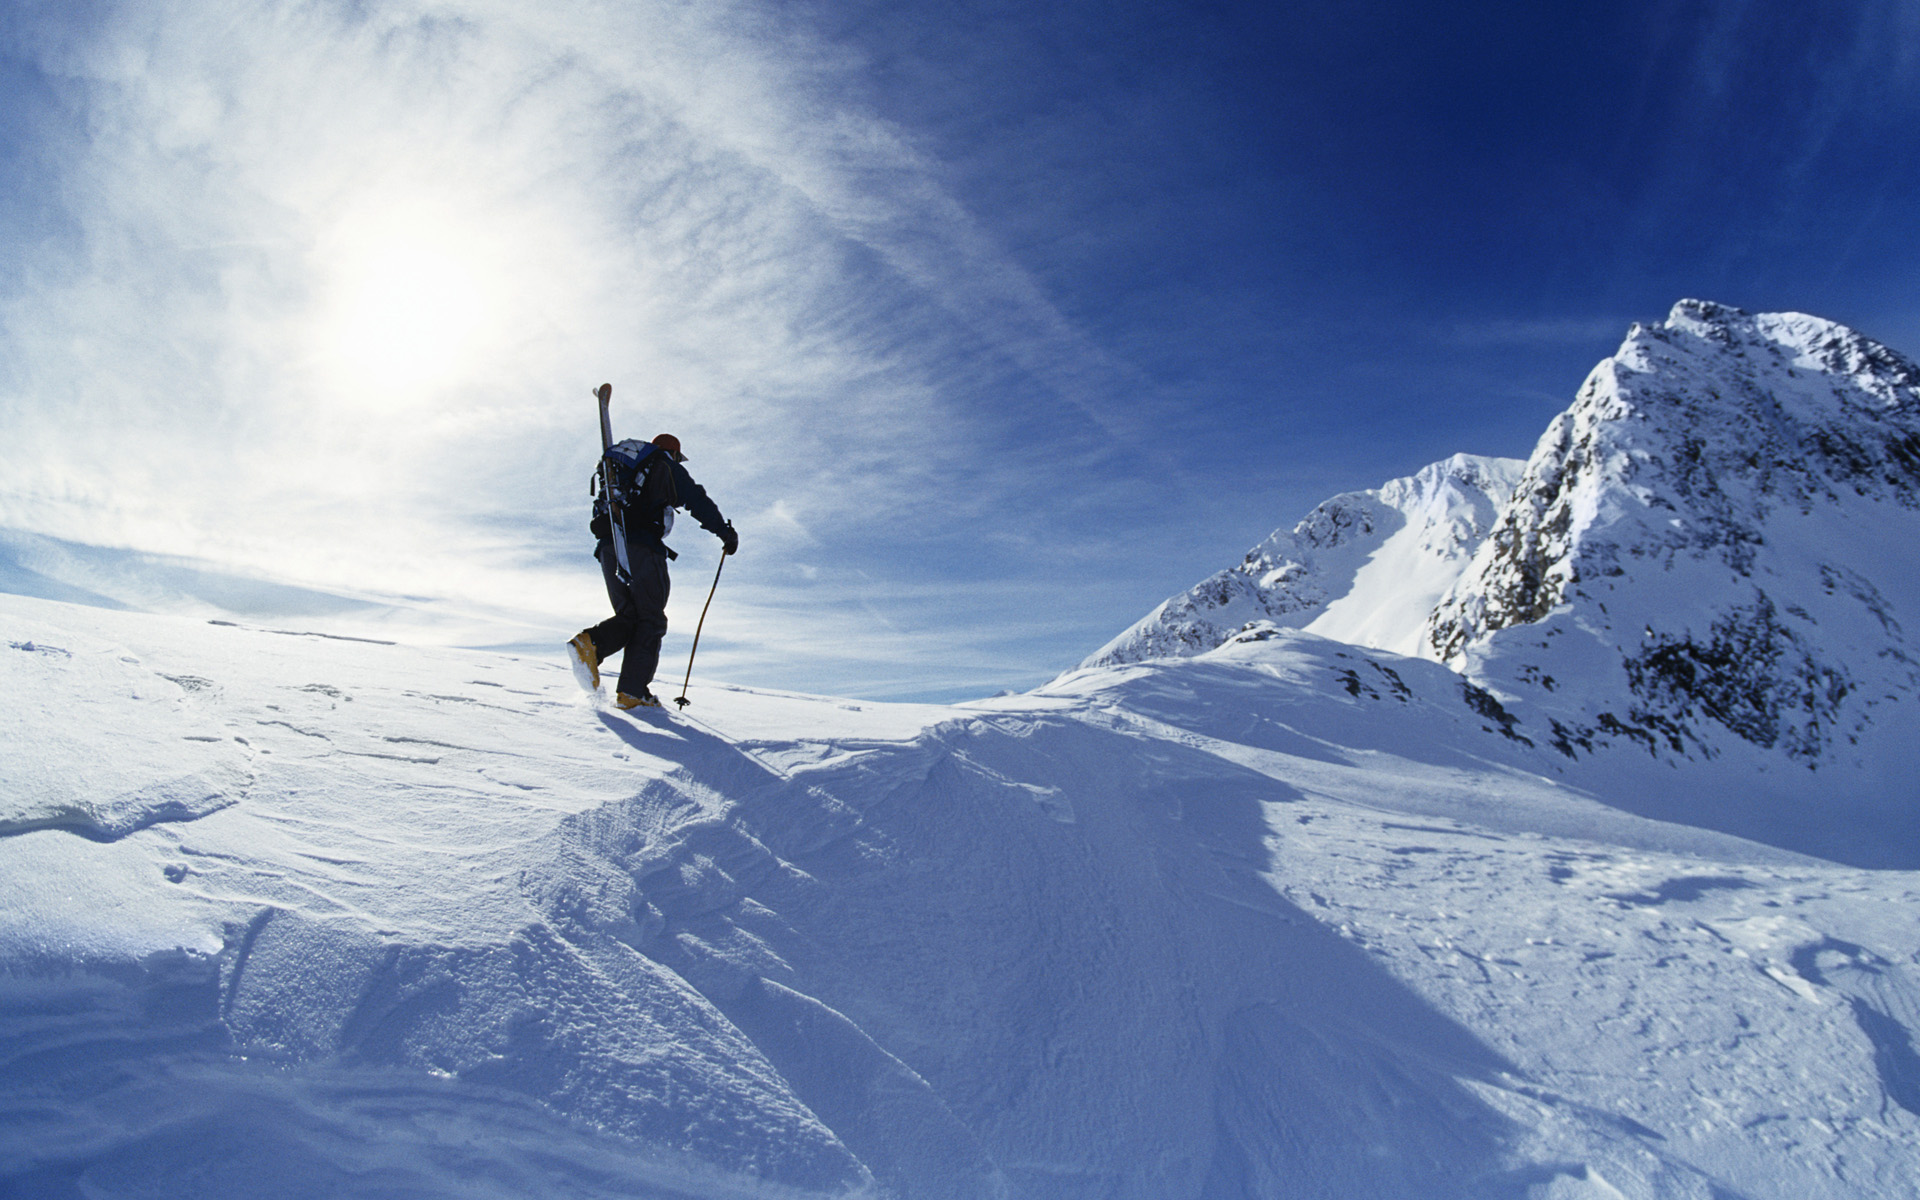 extreme sports wallpaper,ski mountaineering,snow,skiing,winter sport,outdoor recreation